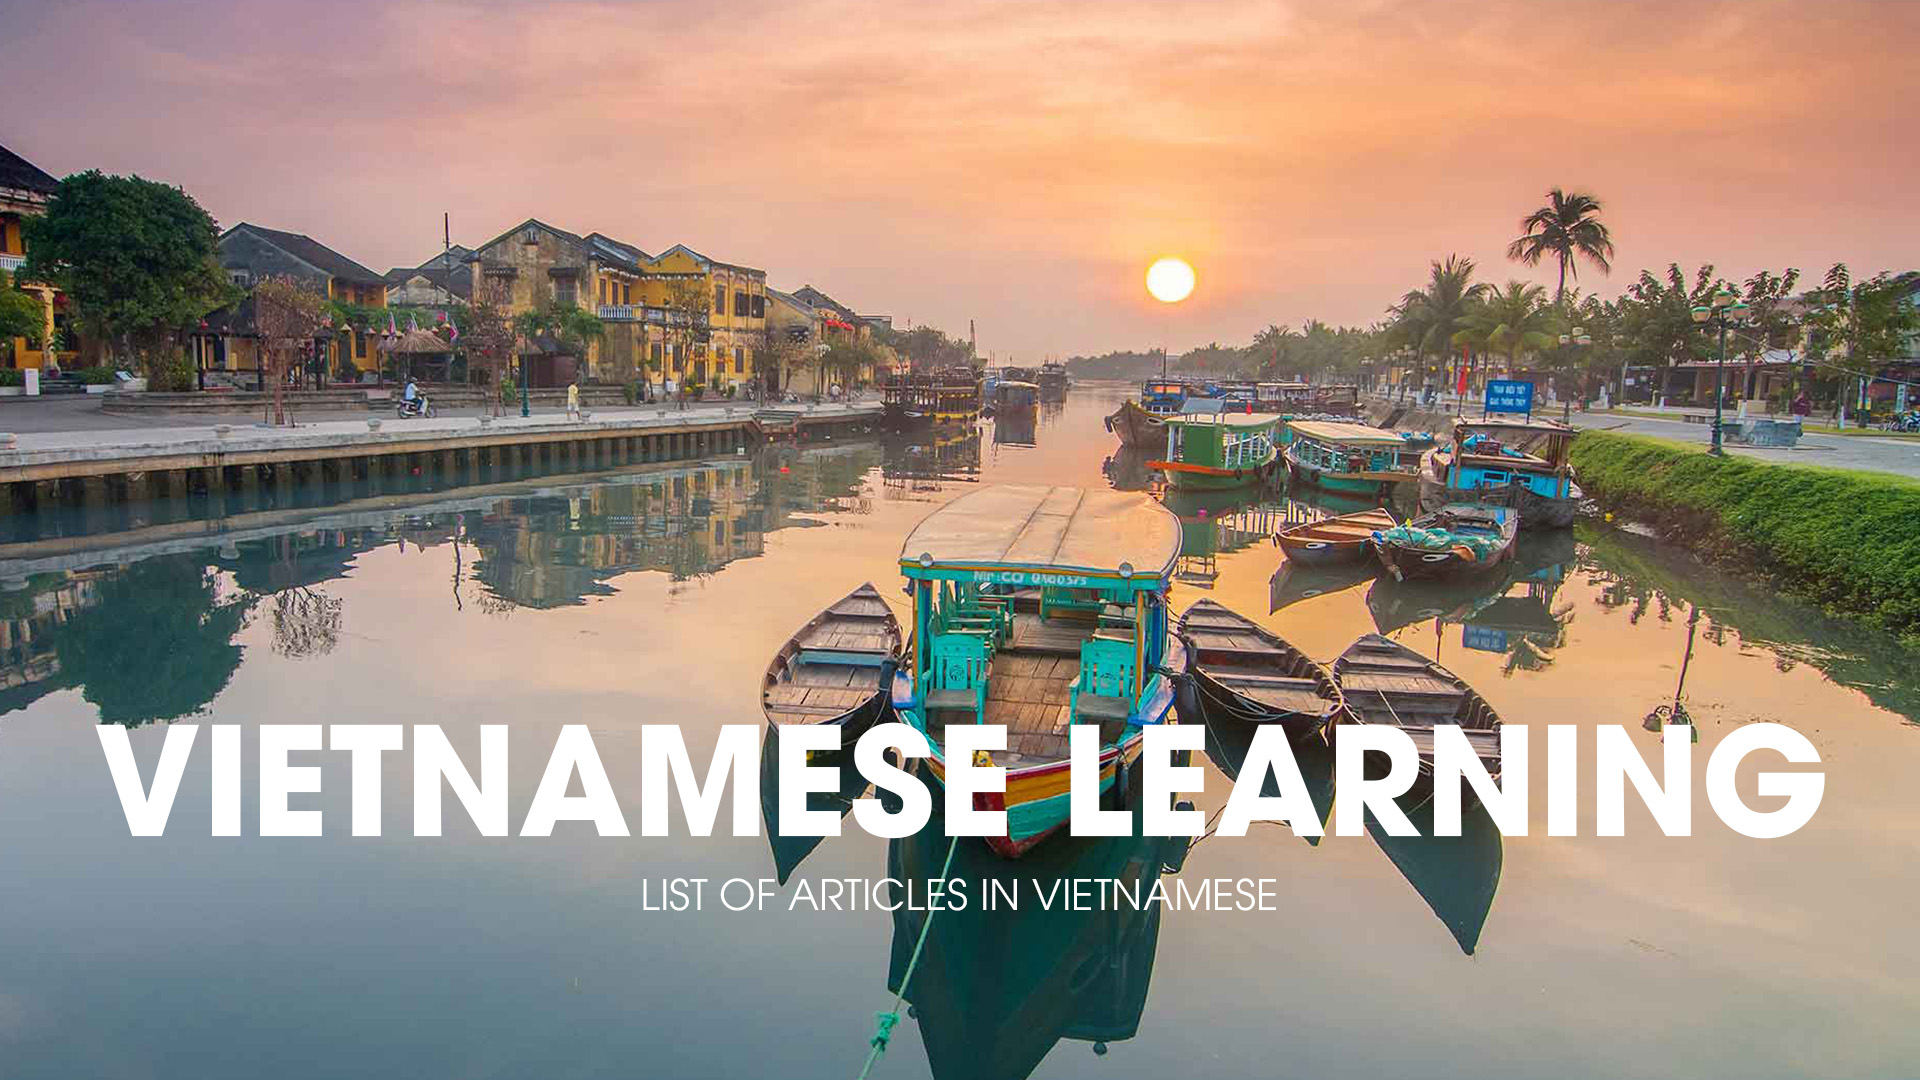 Vietnamese articles in Vietnamese Learning